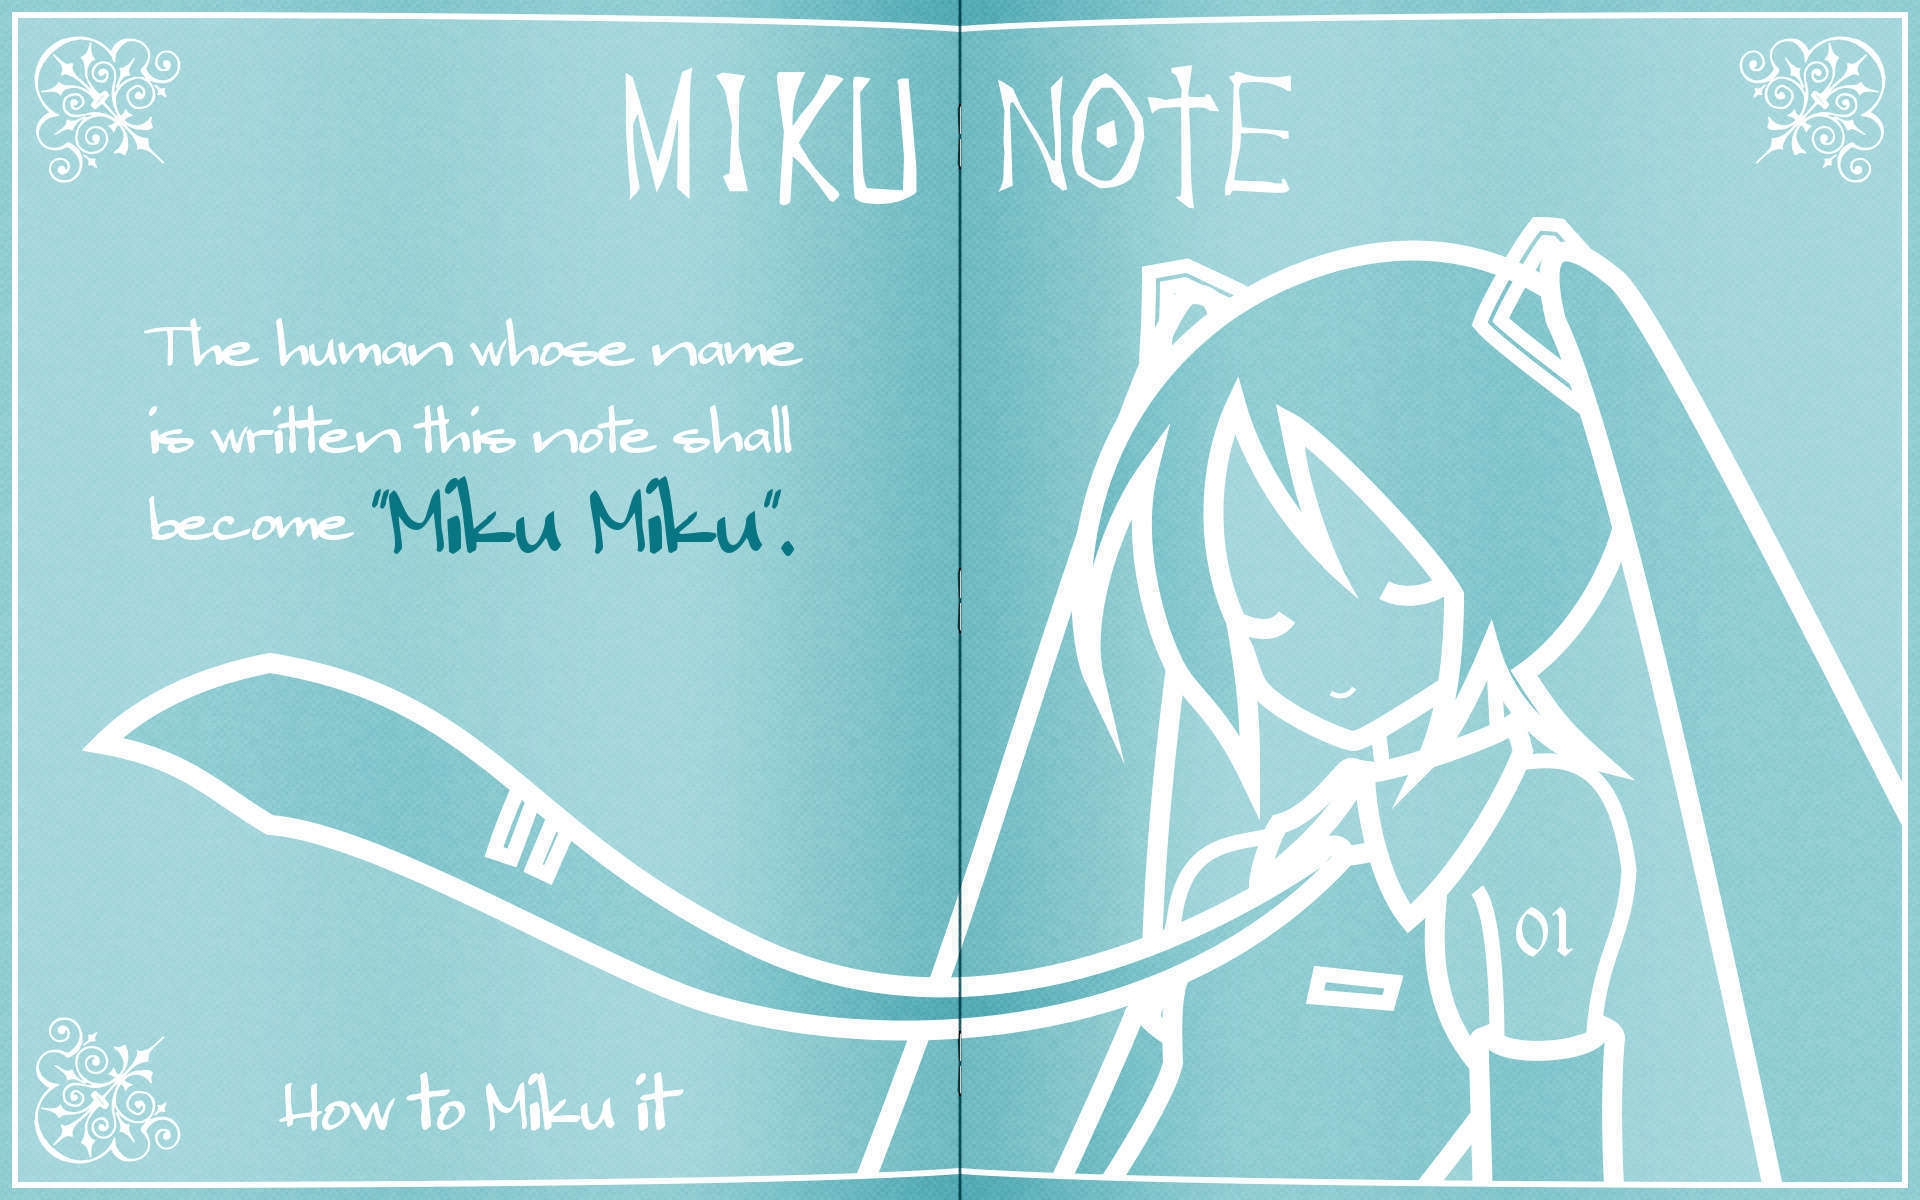 Vocaloid, Hatsune Miku, notes, detached sleeves - desktop wallpaper